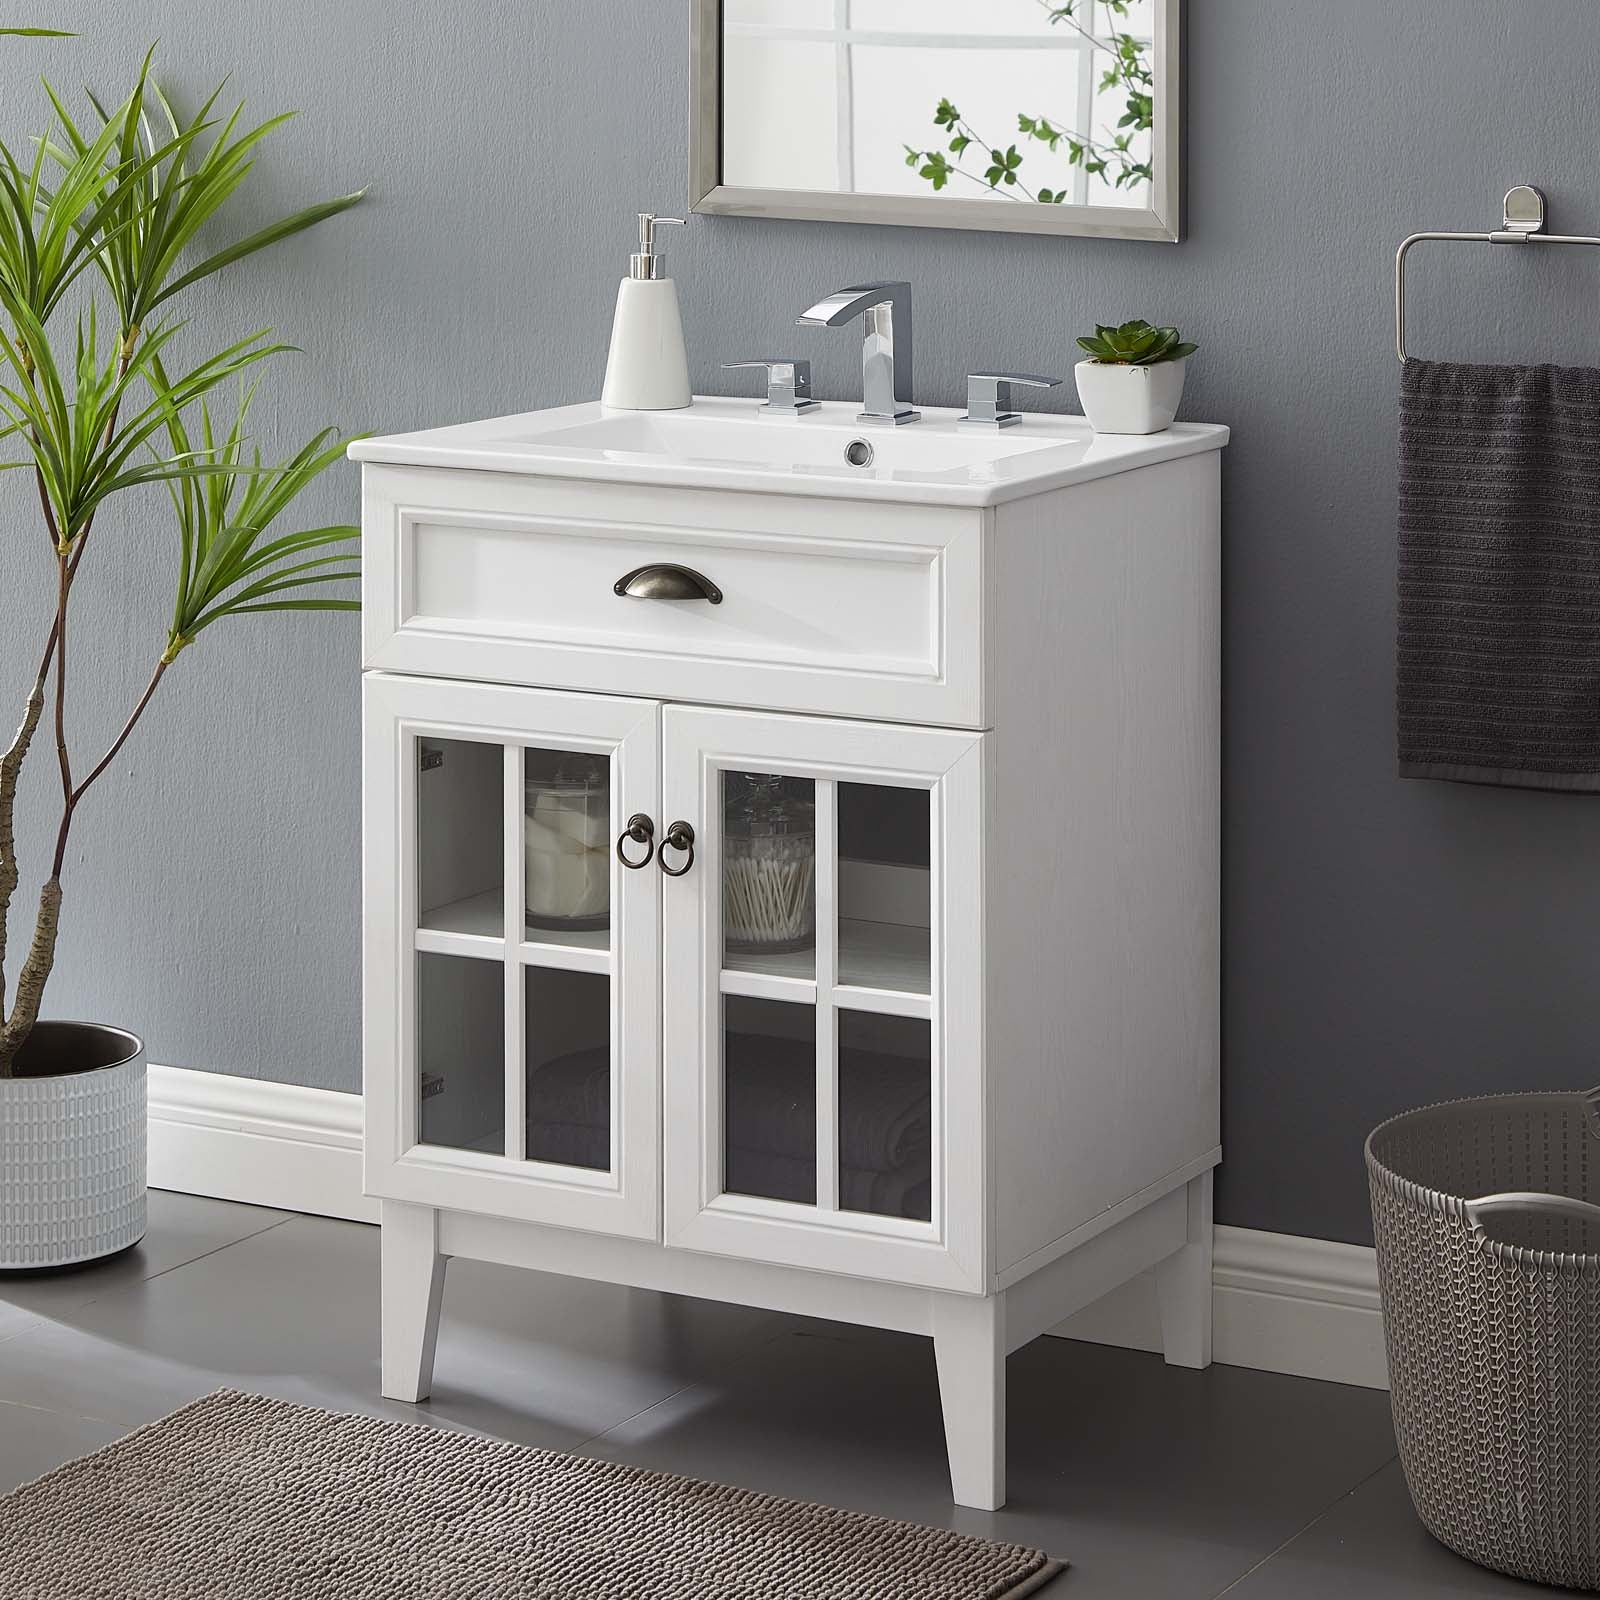 Isle 24" Bathroom Vanity Cabinet - East Shore Modern Home Furnishings